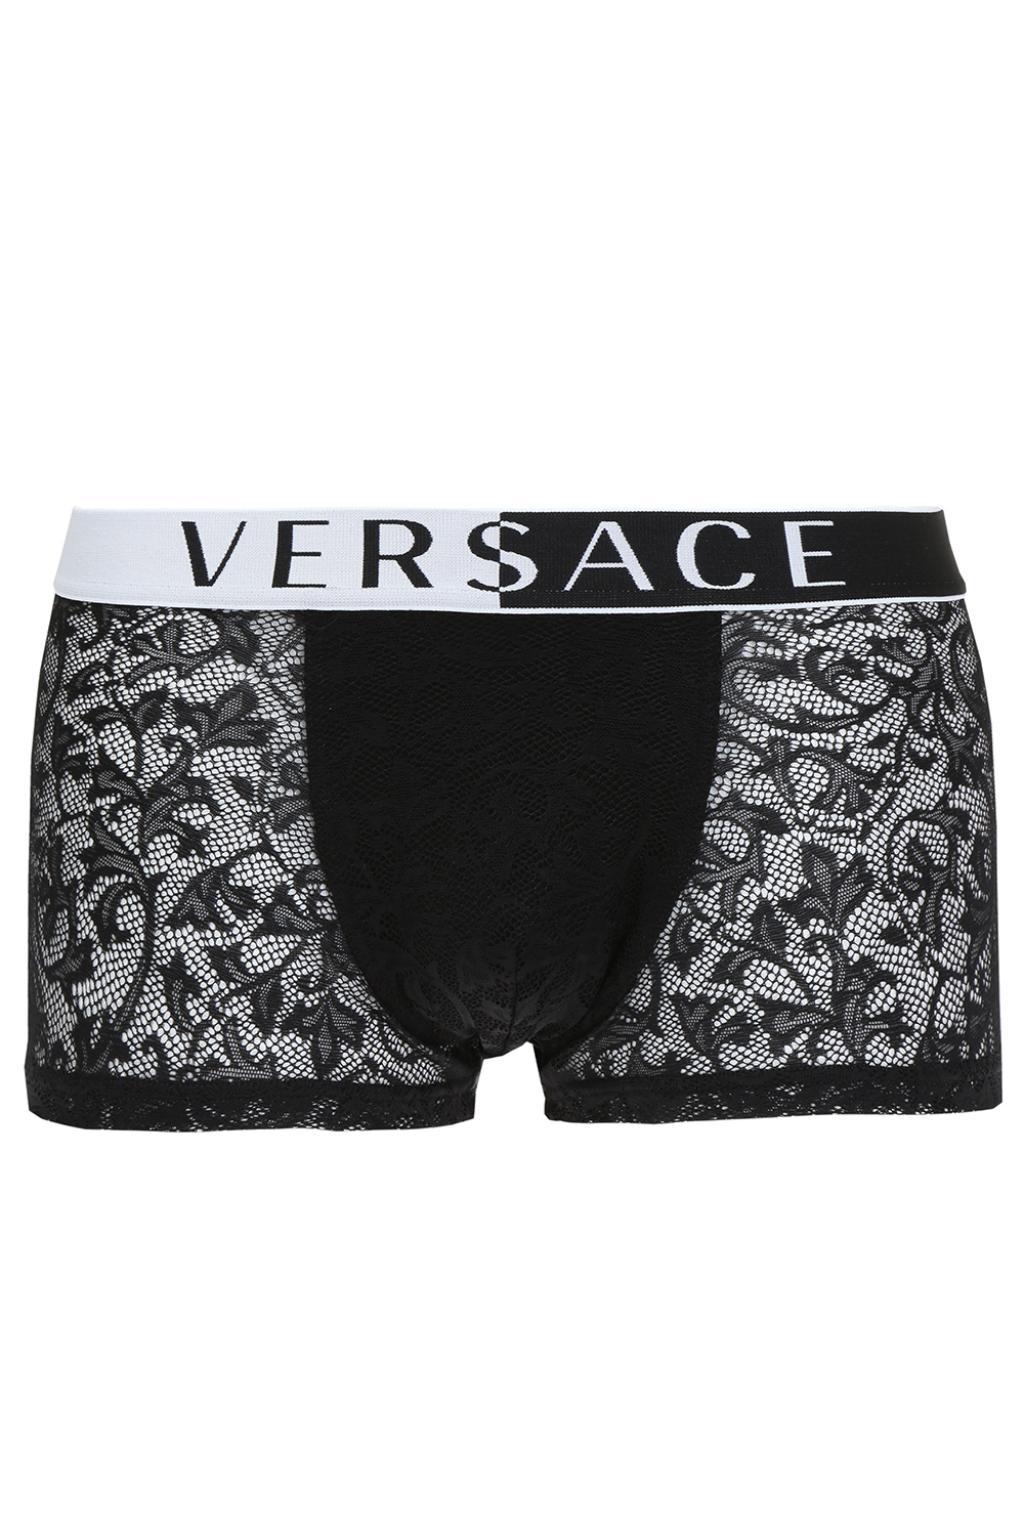 lace versace boxers